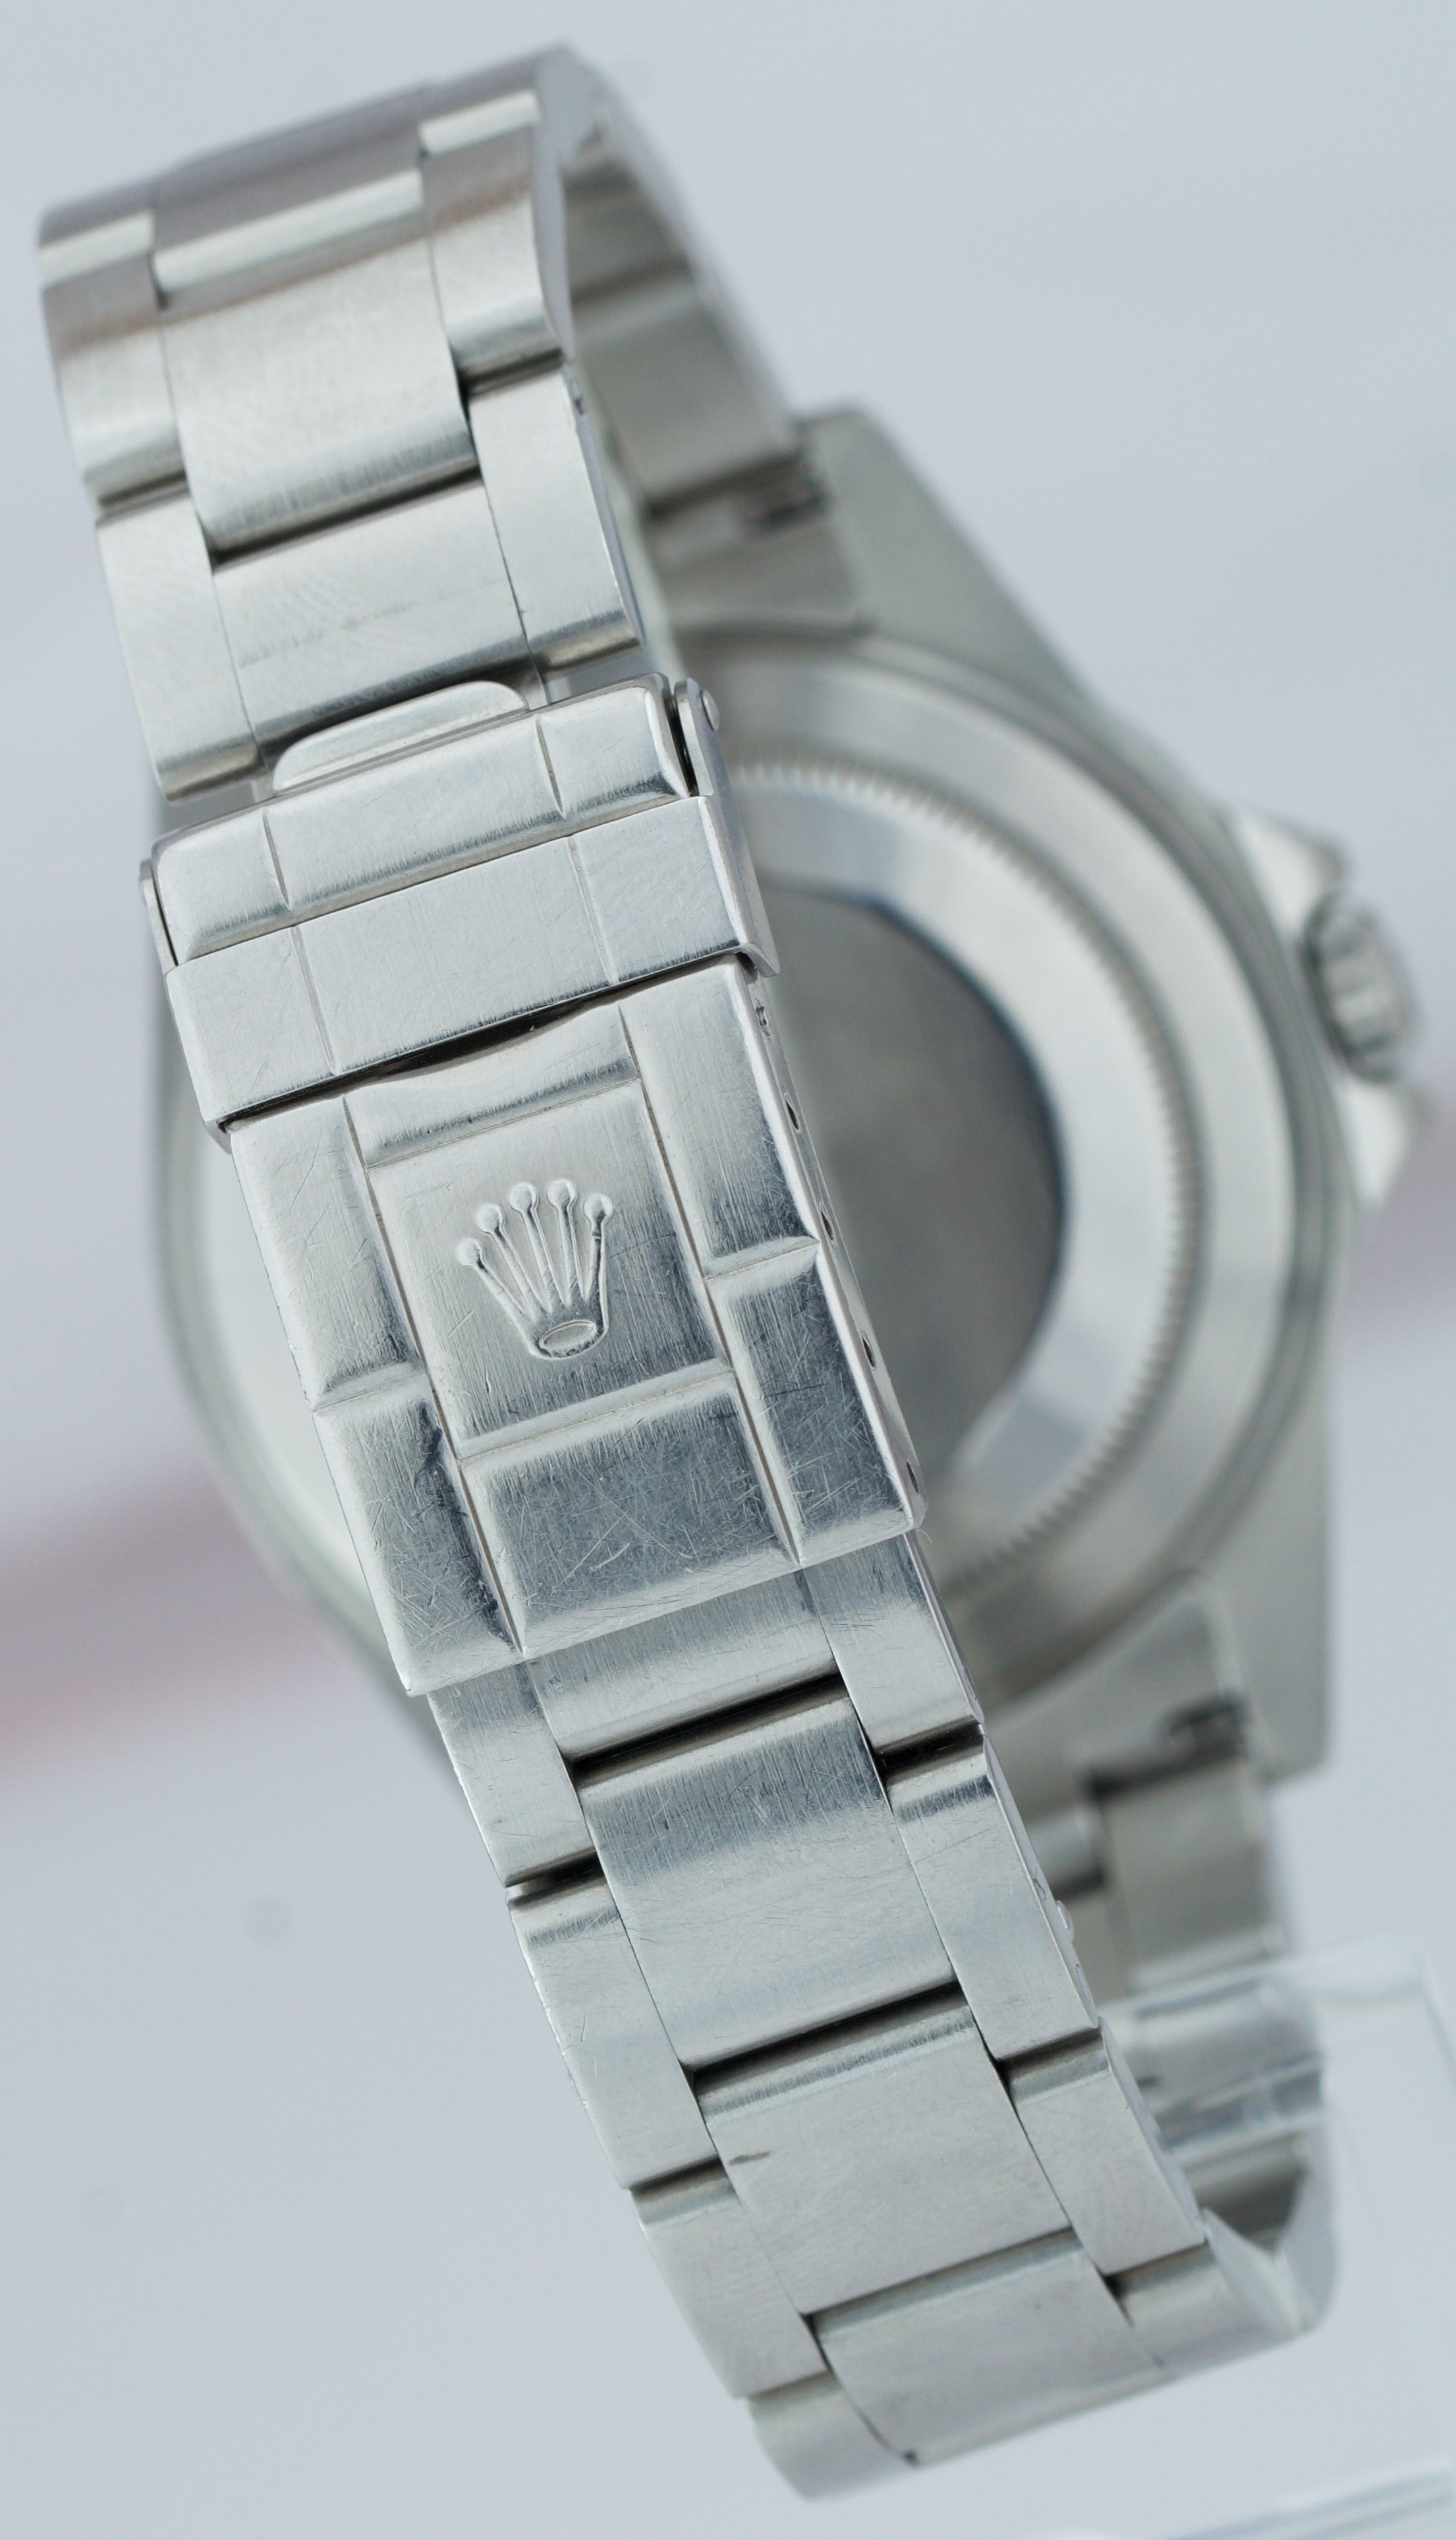 2006 Rolex Explorer II Black Steel SEL NO-HOLES CASE 40mm Date GMT Watch 16570